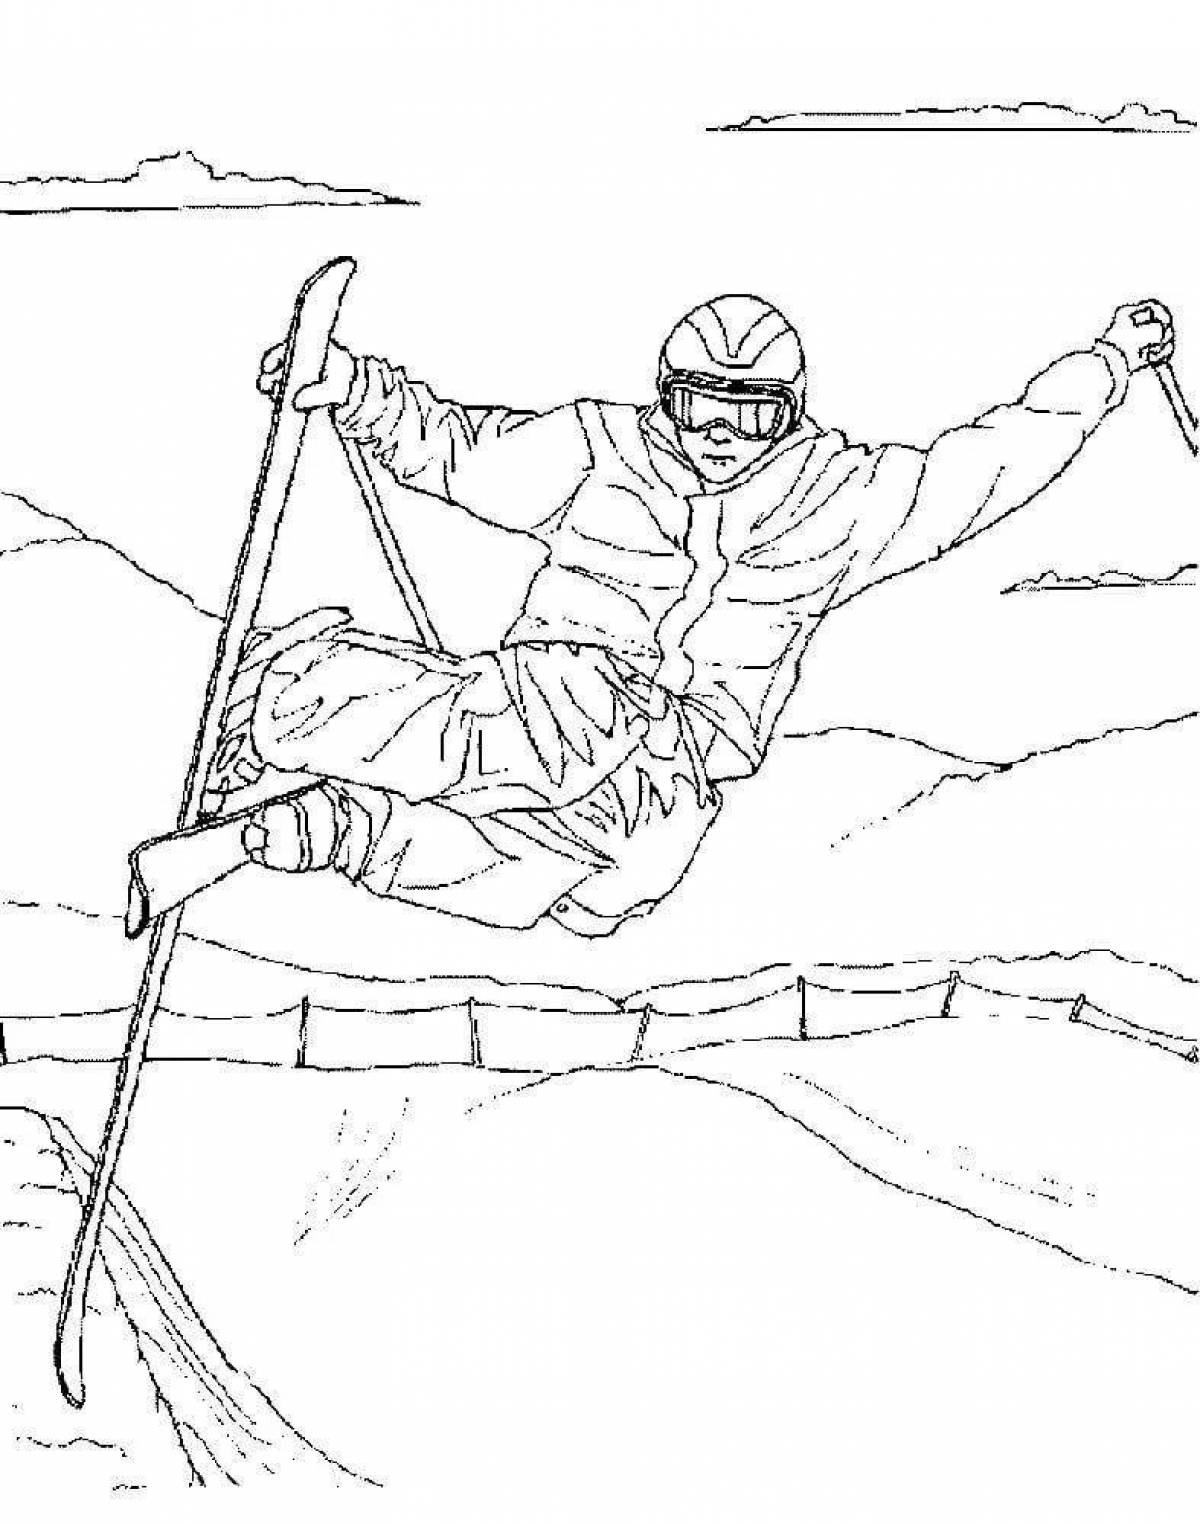 Creative ski jumping coloring book